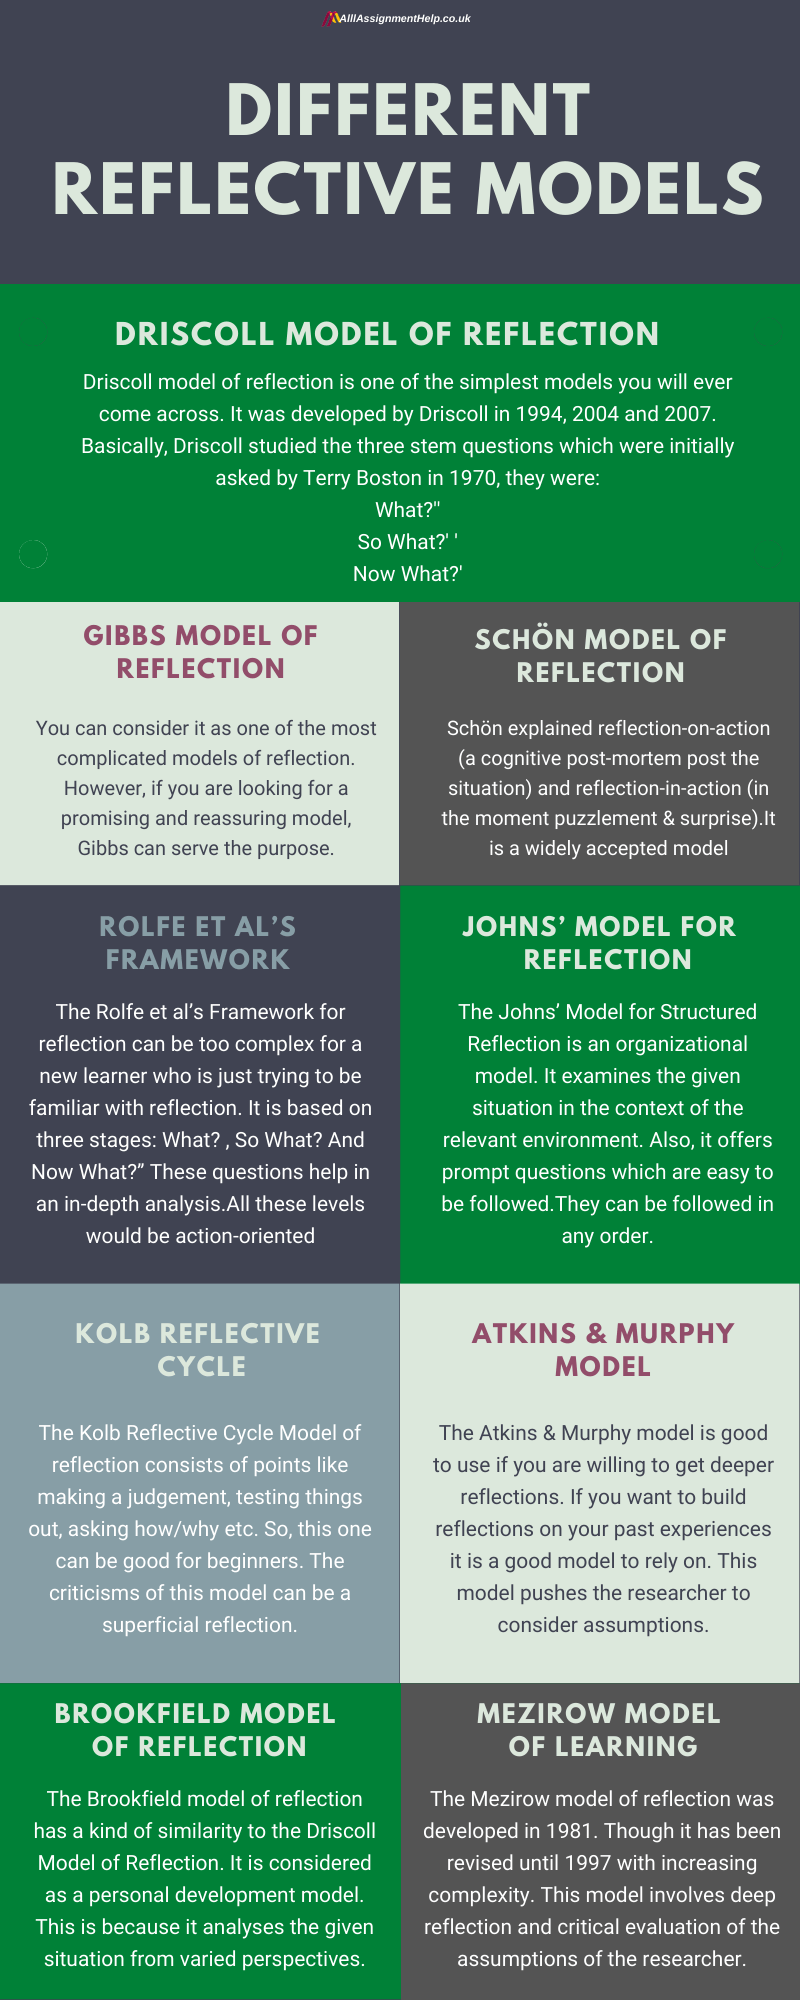 johns model reflection